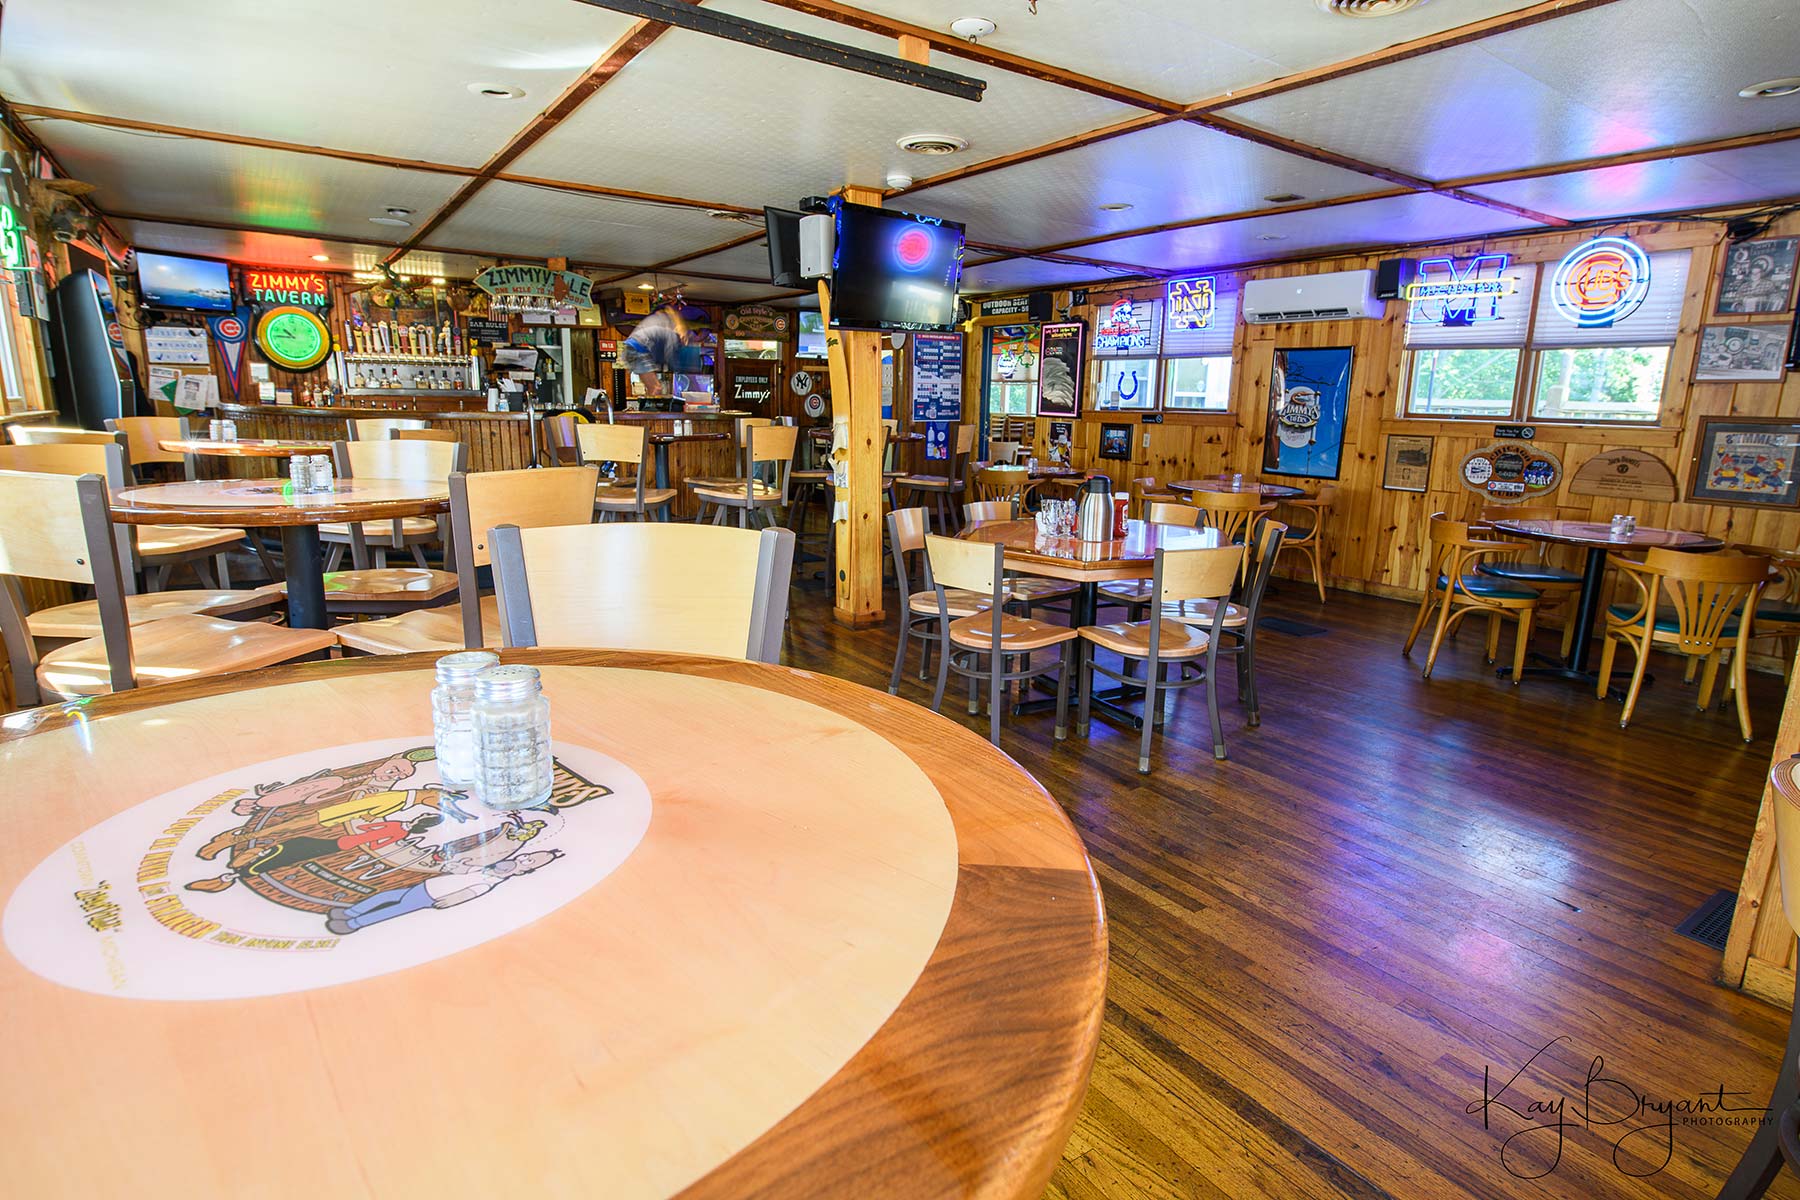 Zimmy's tavern offers lake delicacies in Union, MI